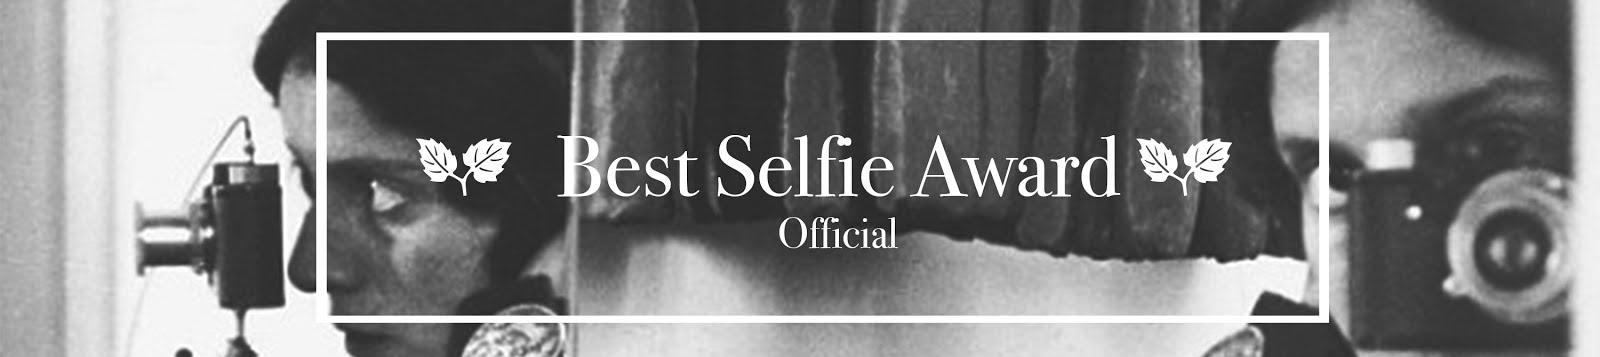 Best Selfie Award